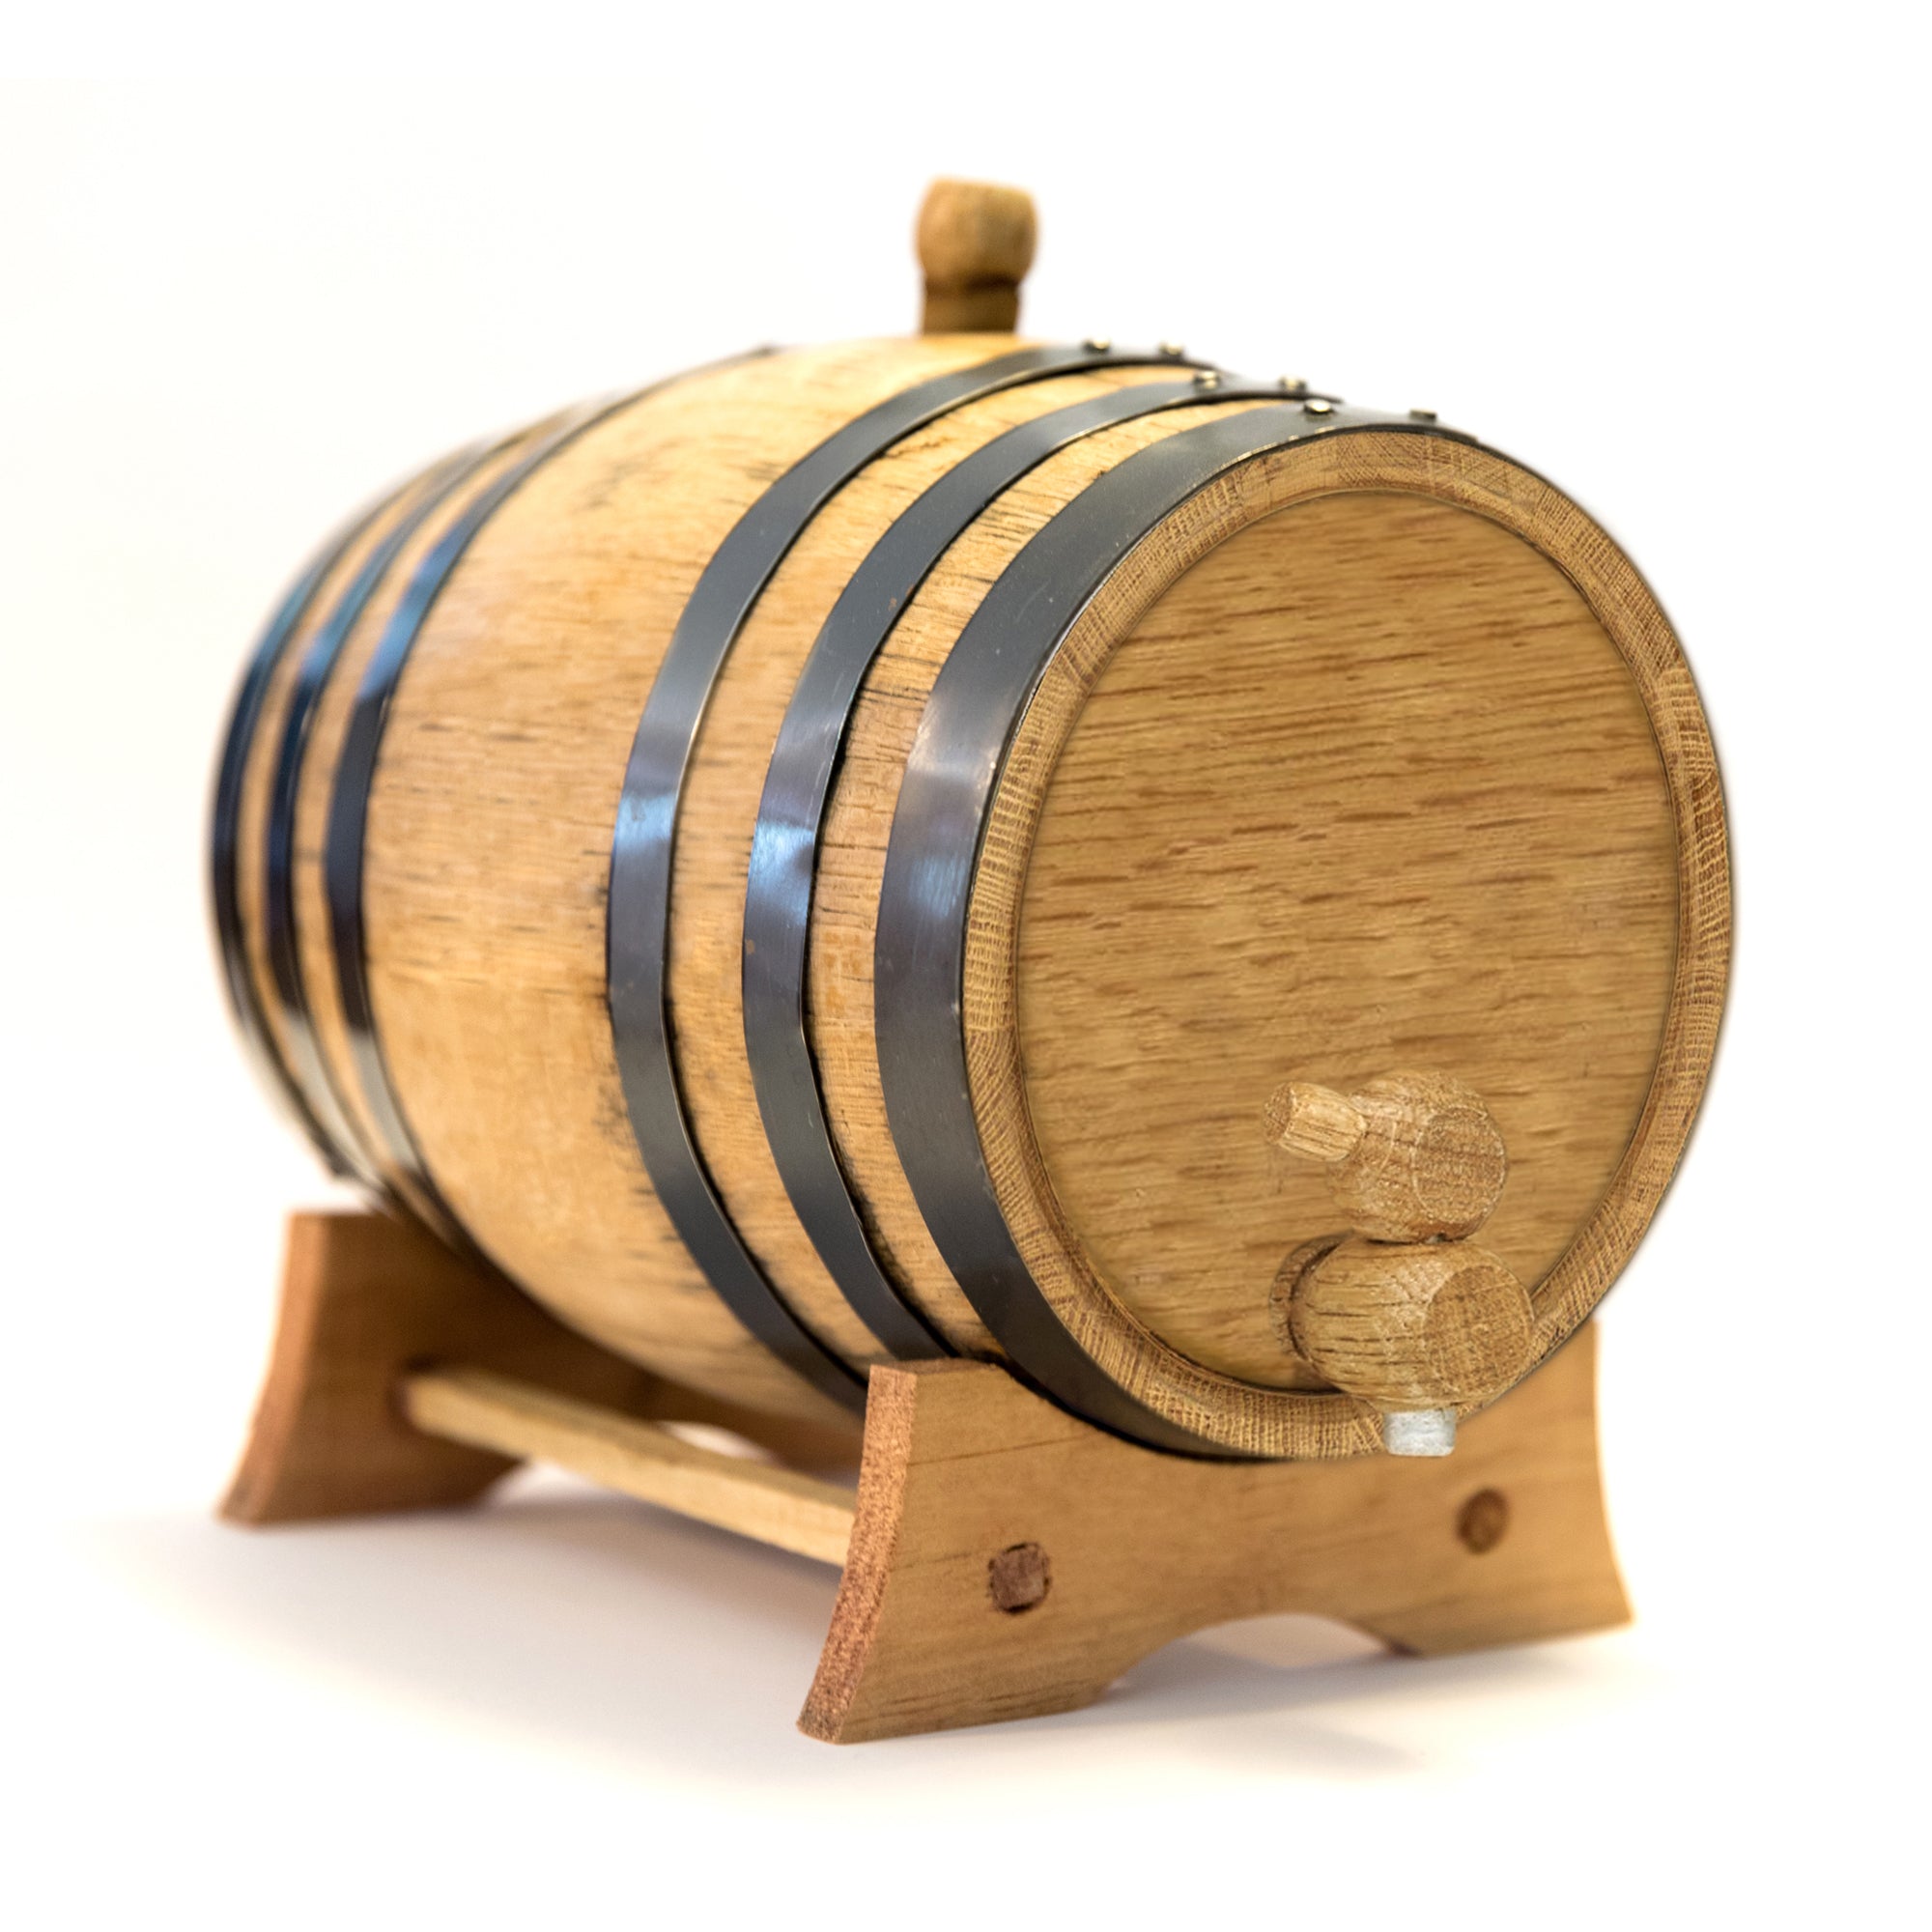 Cocktail Aging Kit | Custom Designed Small Oak Aging Barrel - Blind Pig Drinking Co.